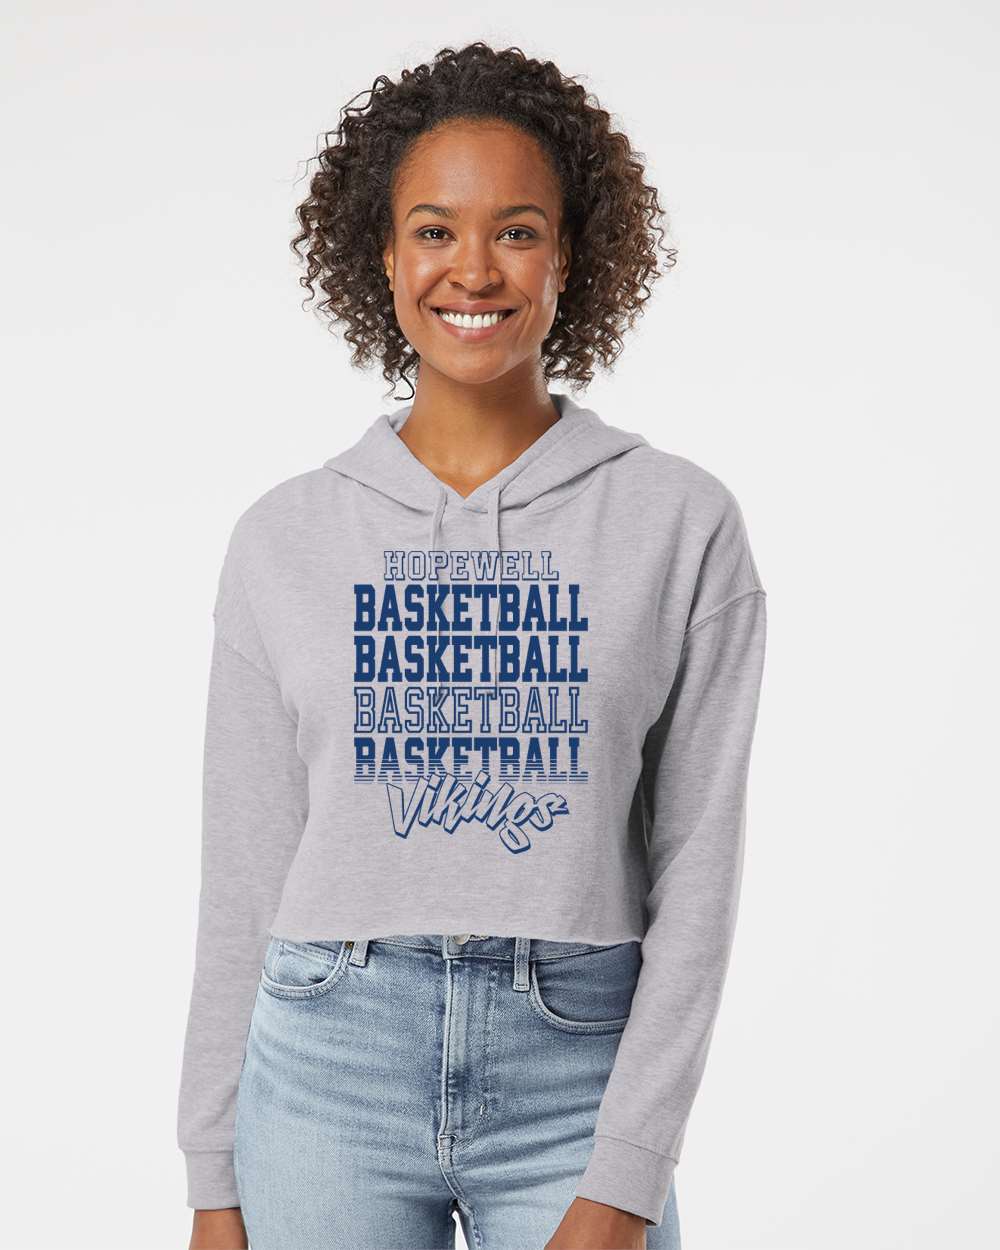 Women's Hopewell Booster Hooded Crop Sweatshirt (Basketball Life)